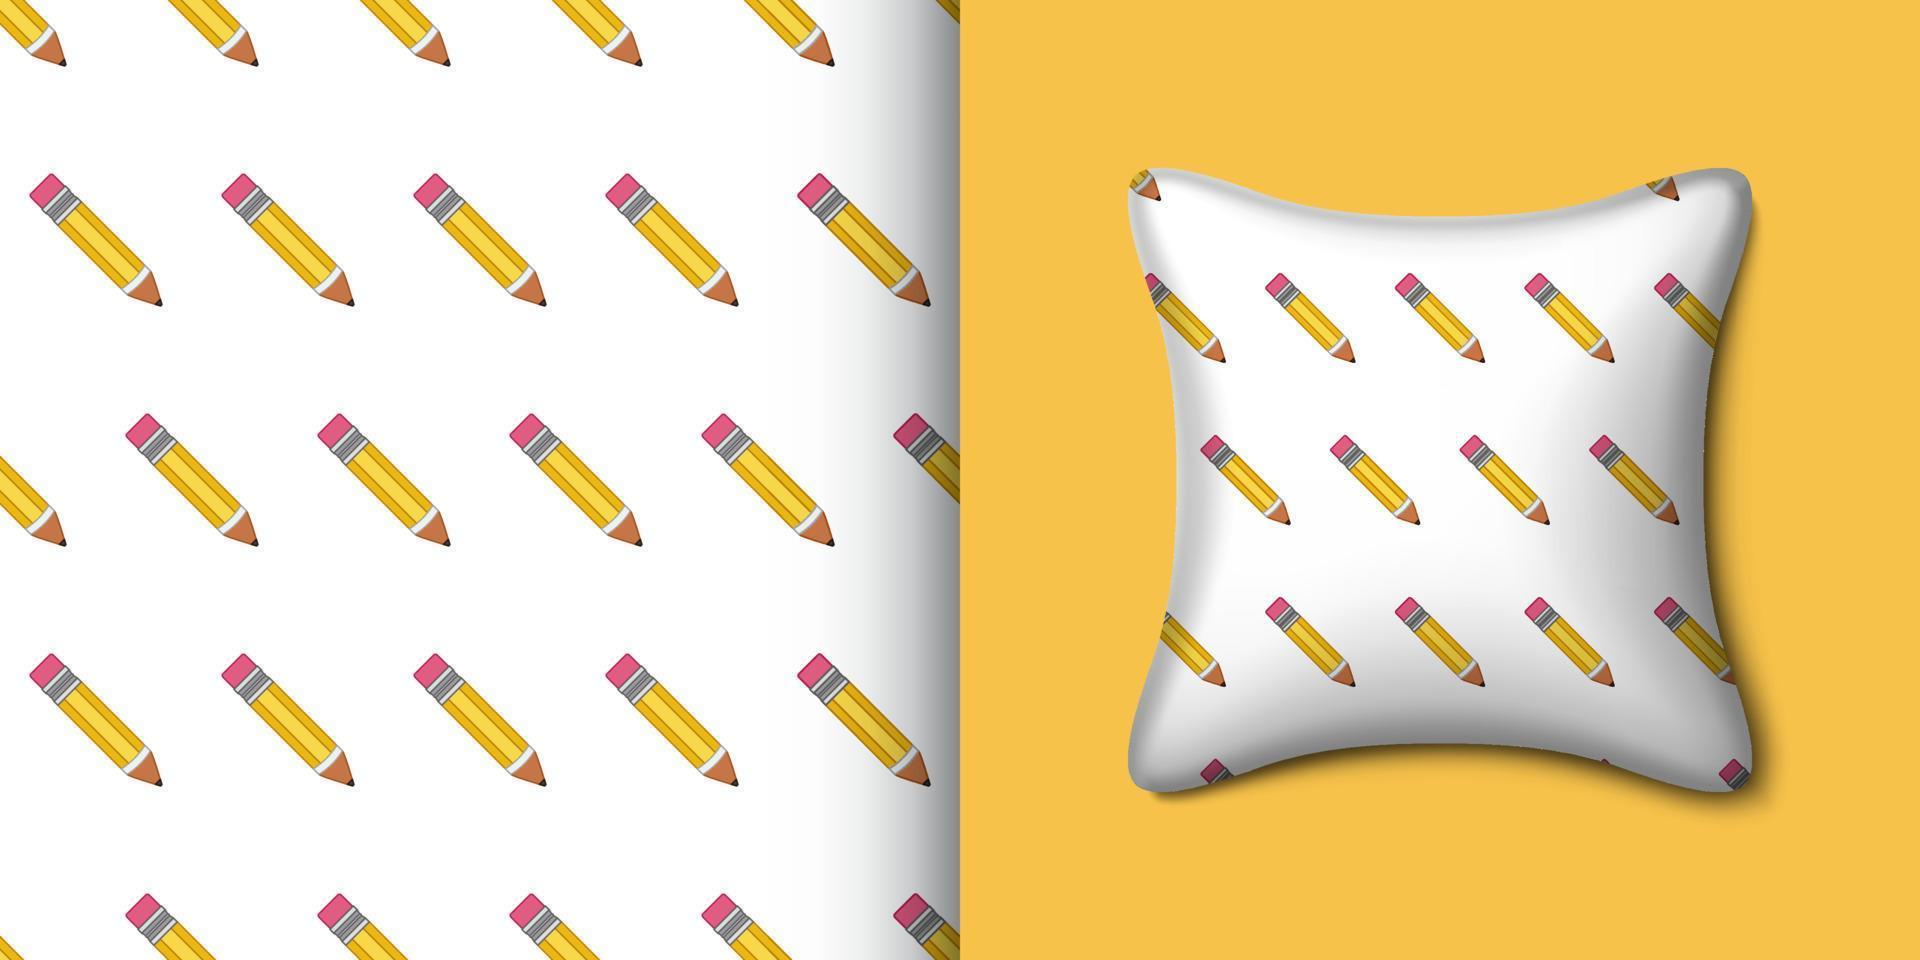 Bleistift Musterdesign mit Kissen. Vektor-Illustration vektor